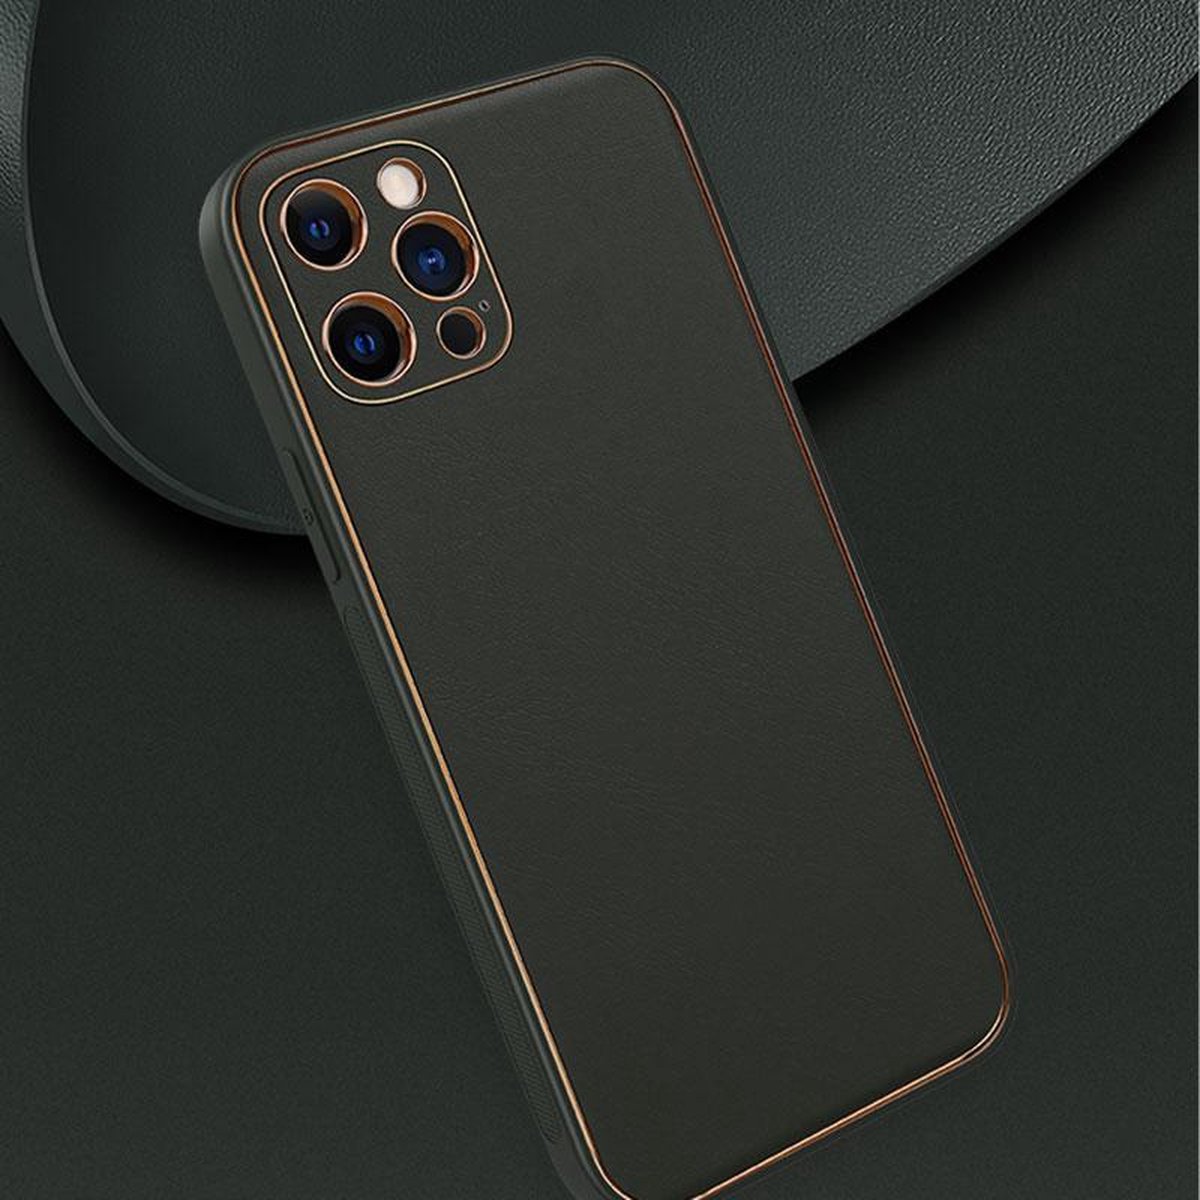 JPM Iphone 12 Pro Black Leather Case